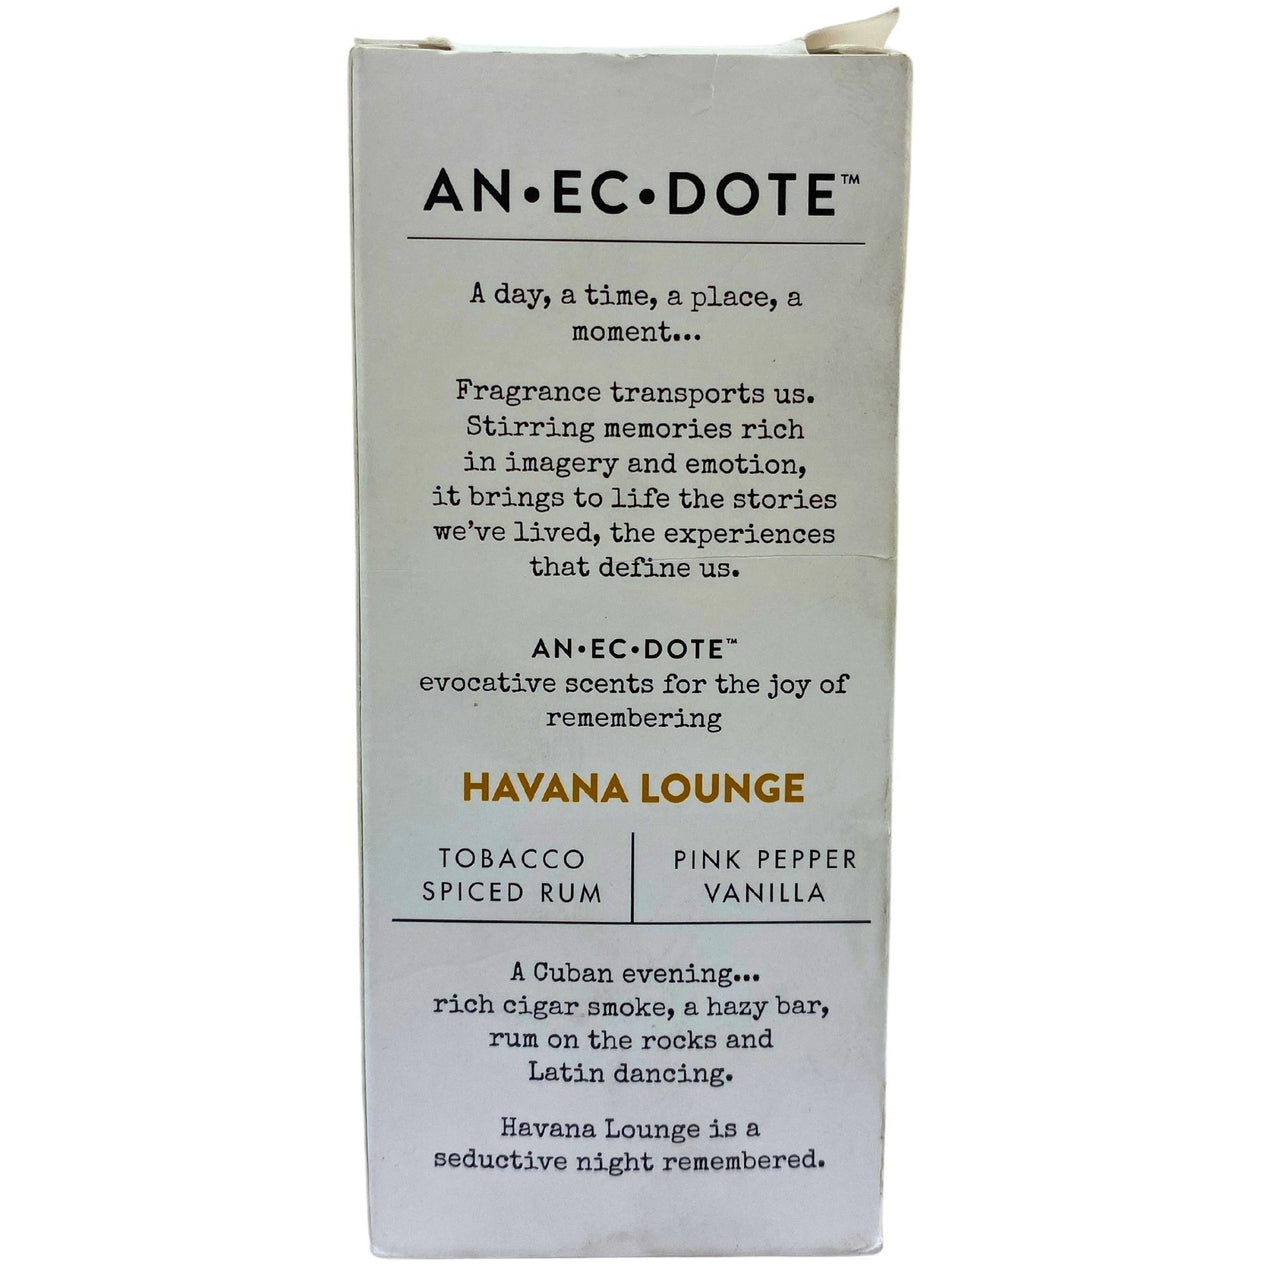 Anecdote Havana Lounge Tobacco Spiced Rum|Pink Pepper Vanilla 3.4OZ (50 Pcs lot) - Discount Wholesalers Inc